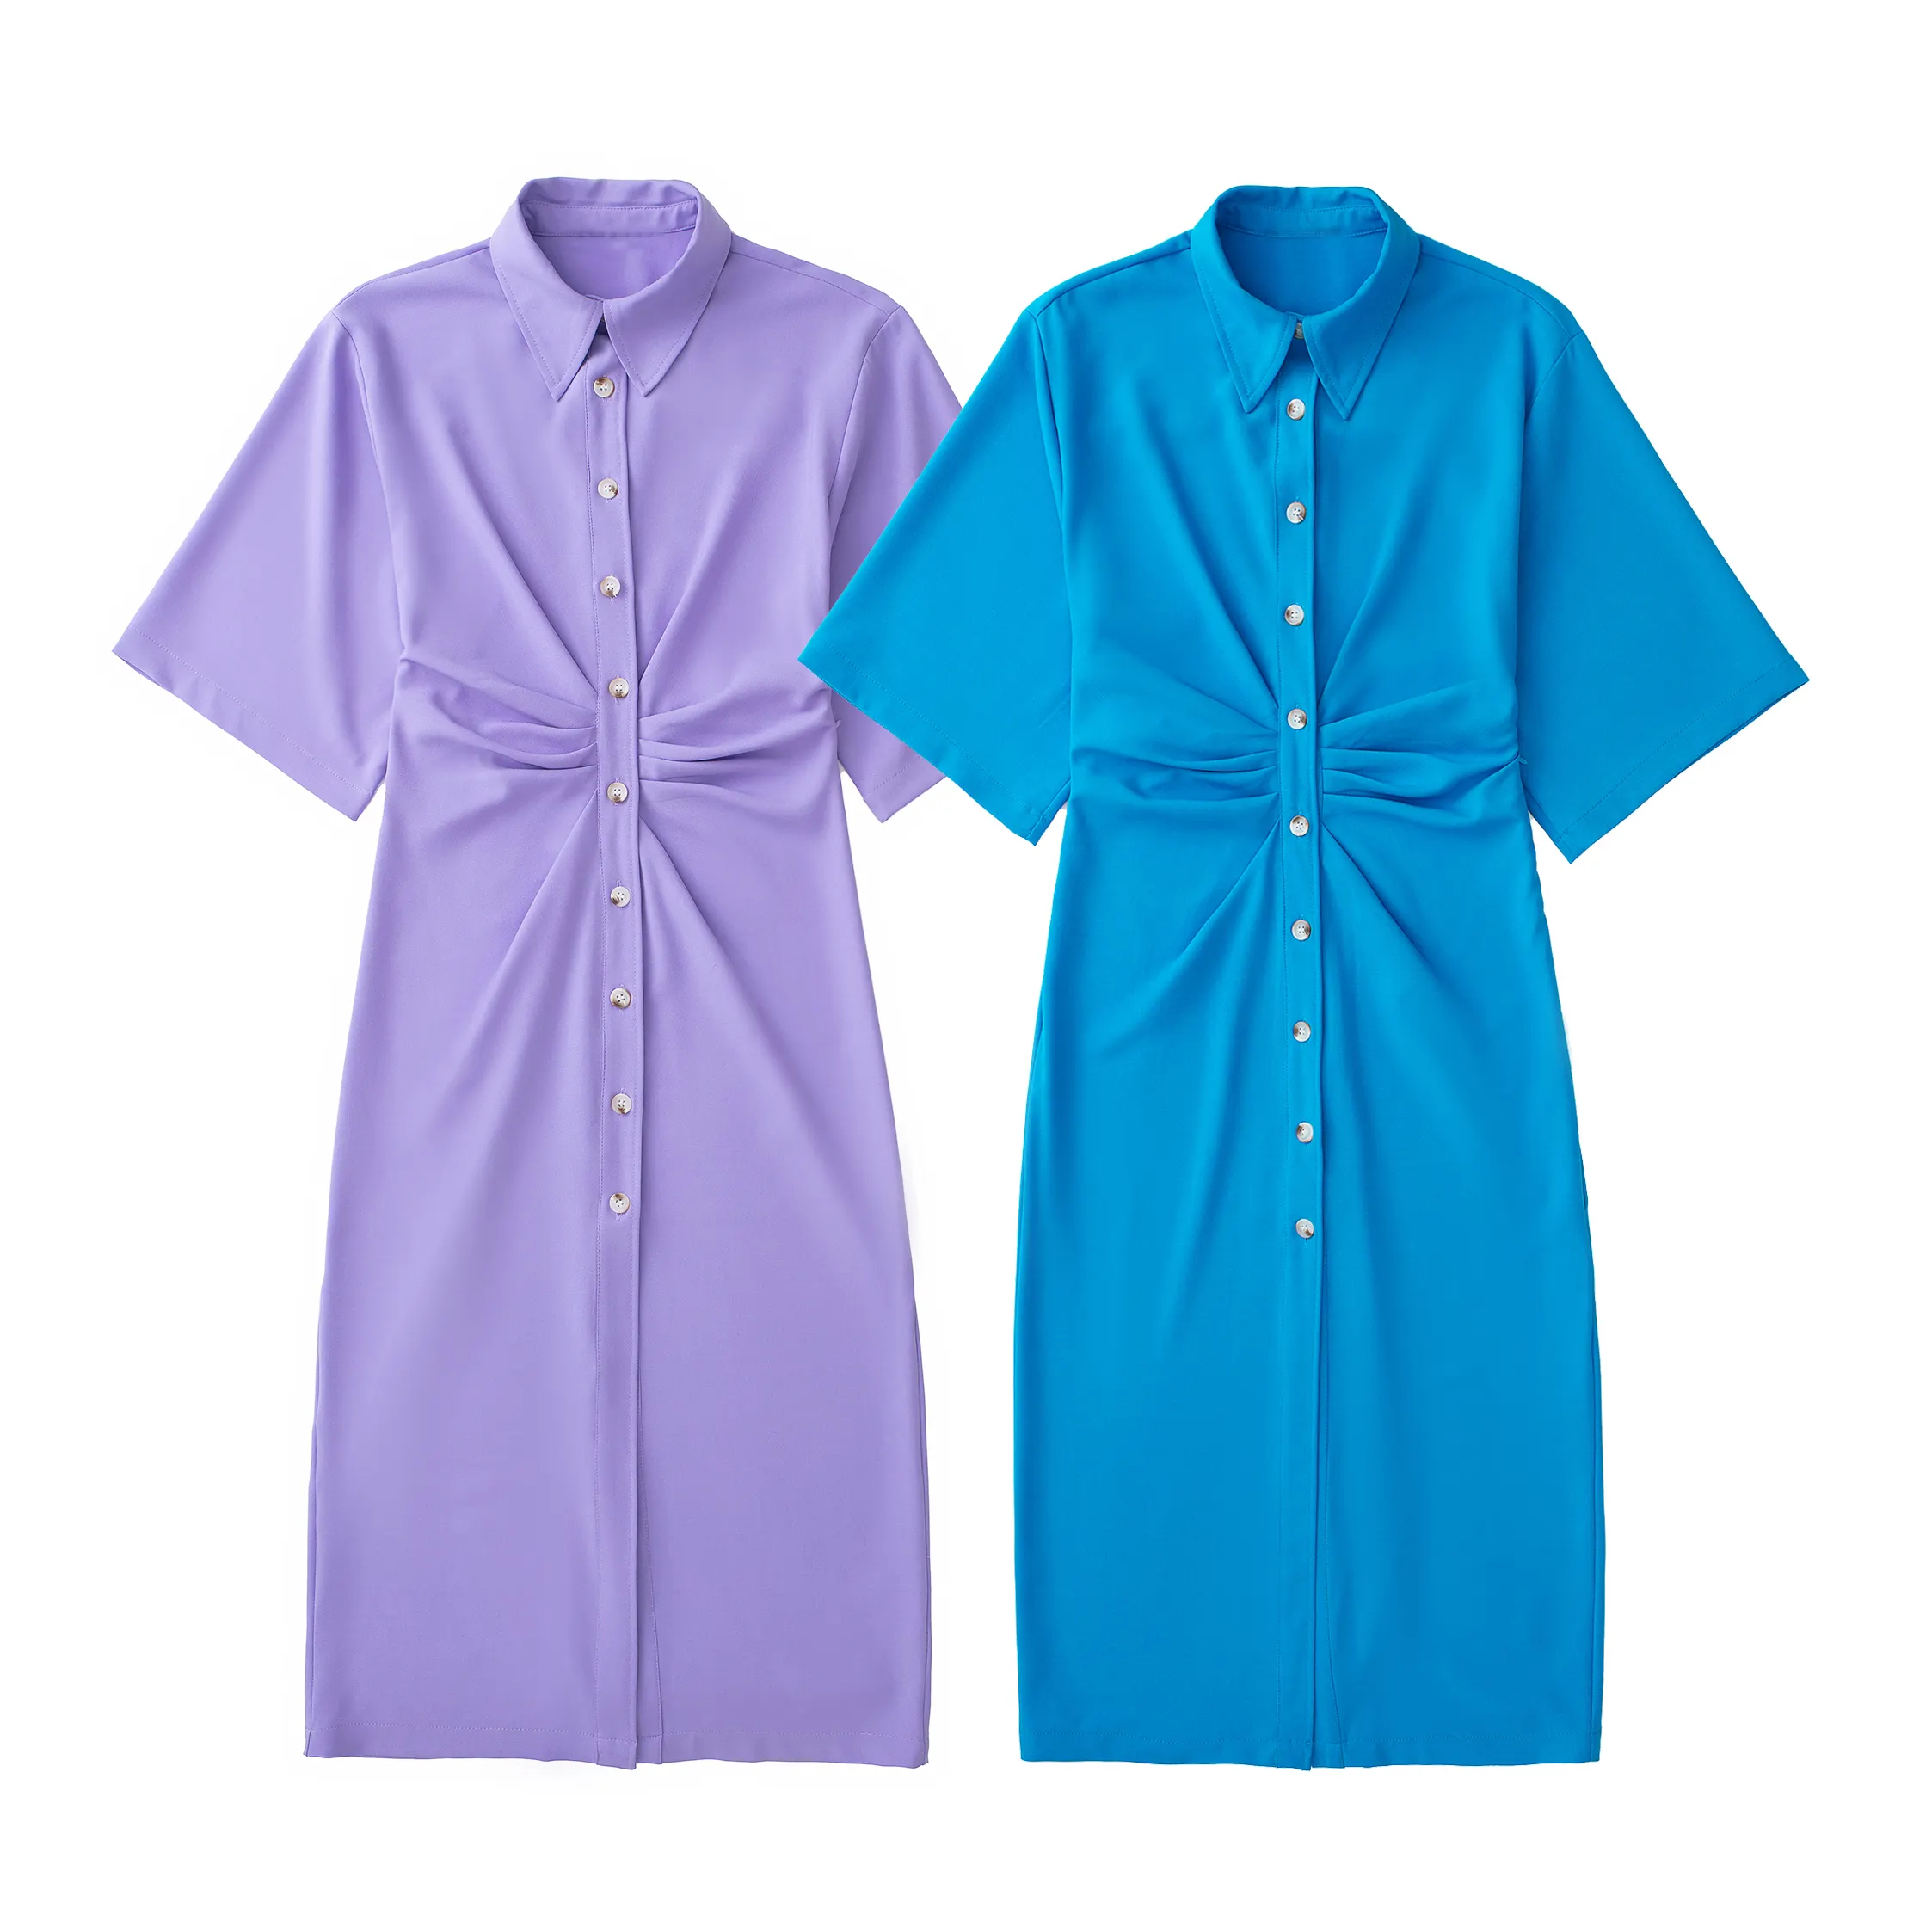 2 colorway peter pan collar fashionable design women casual button up summer shirt dress